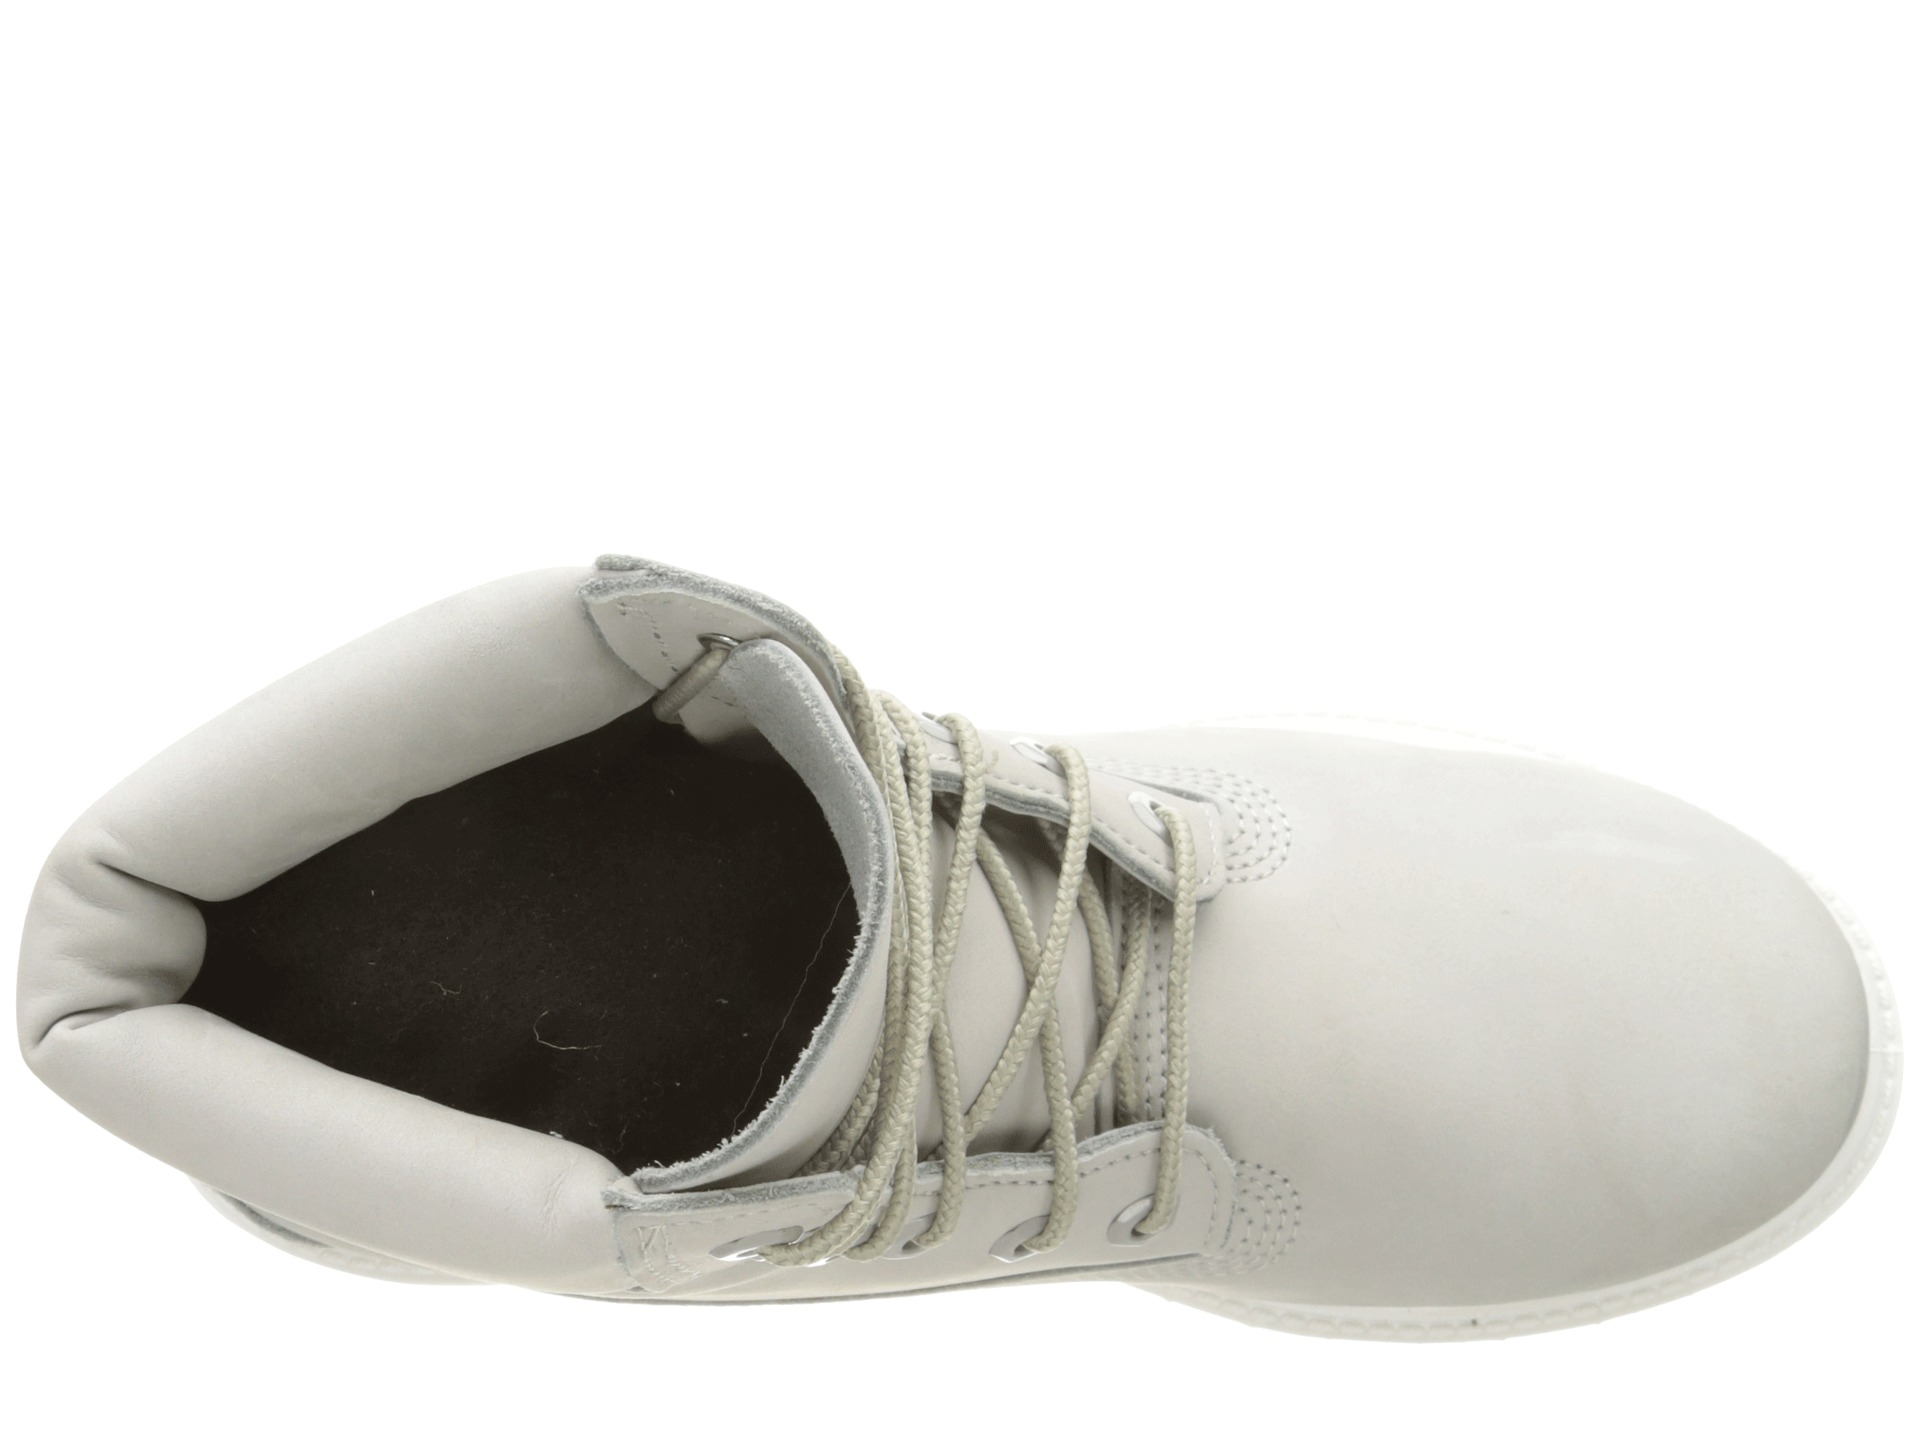 Timberland Leather 6" Premium Boot in Light Grey Nubuck (Gray) | Lyst